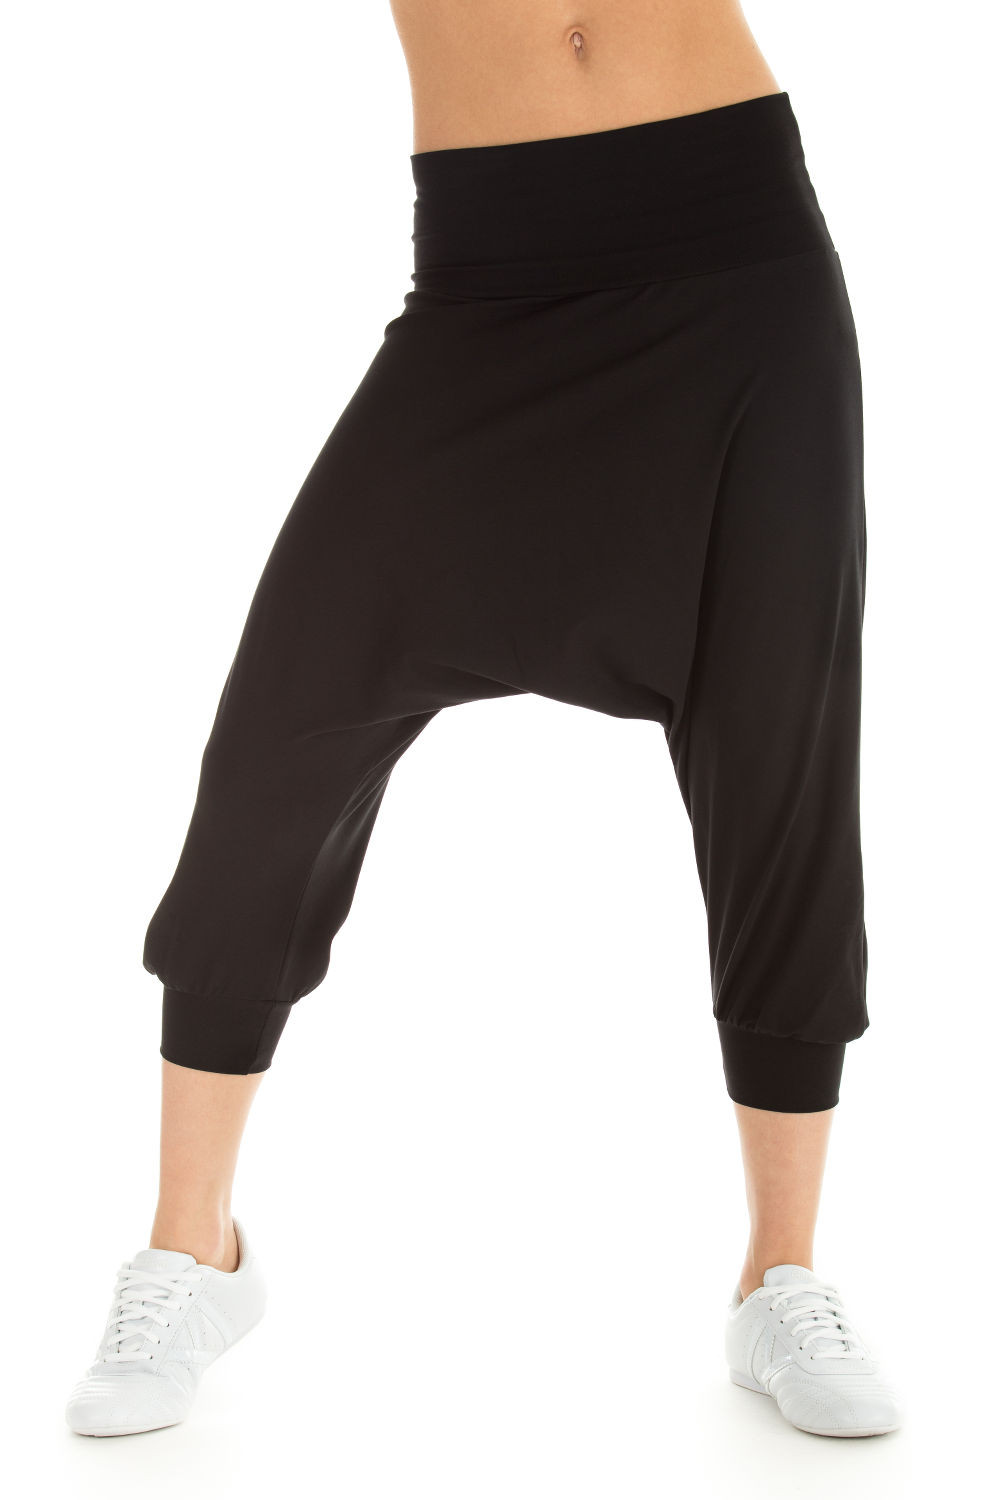 Buy SHIDJERU Mens Yoga Pants, Dance Pants, Black Yoga Wear Clothing, Wide  Pants, Cotton Yoga Harem Pants, Workout Comfy Pants Dance Clothes Mens  Online in India - Etsy